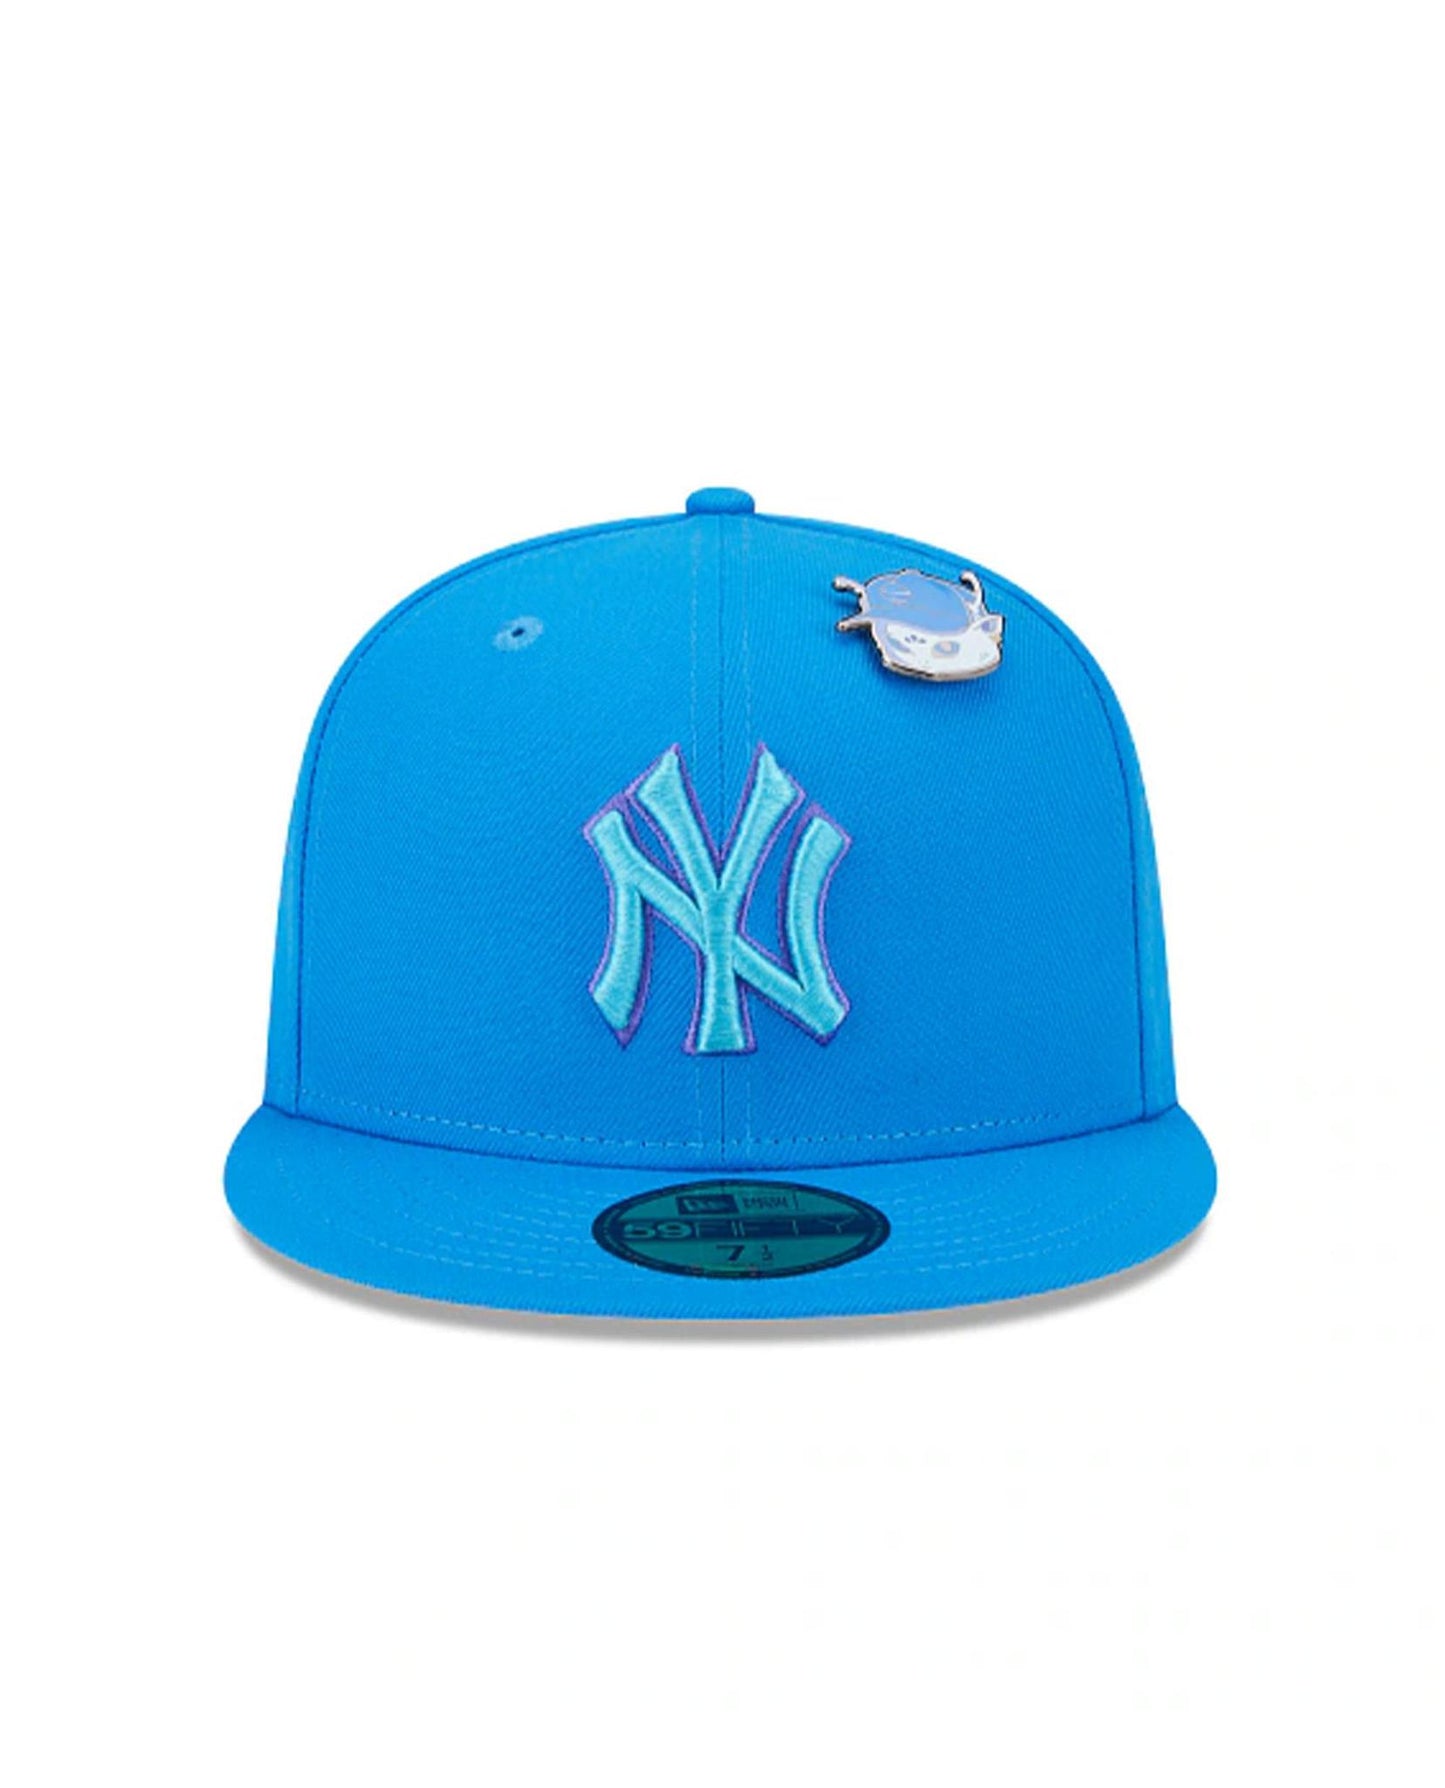 new era blue yankees hat